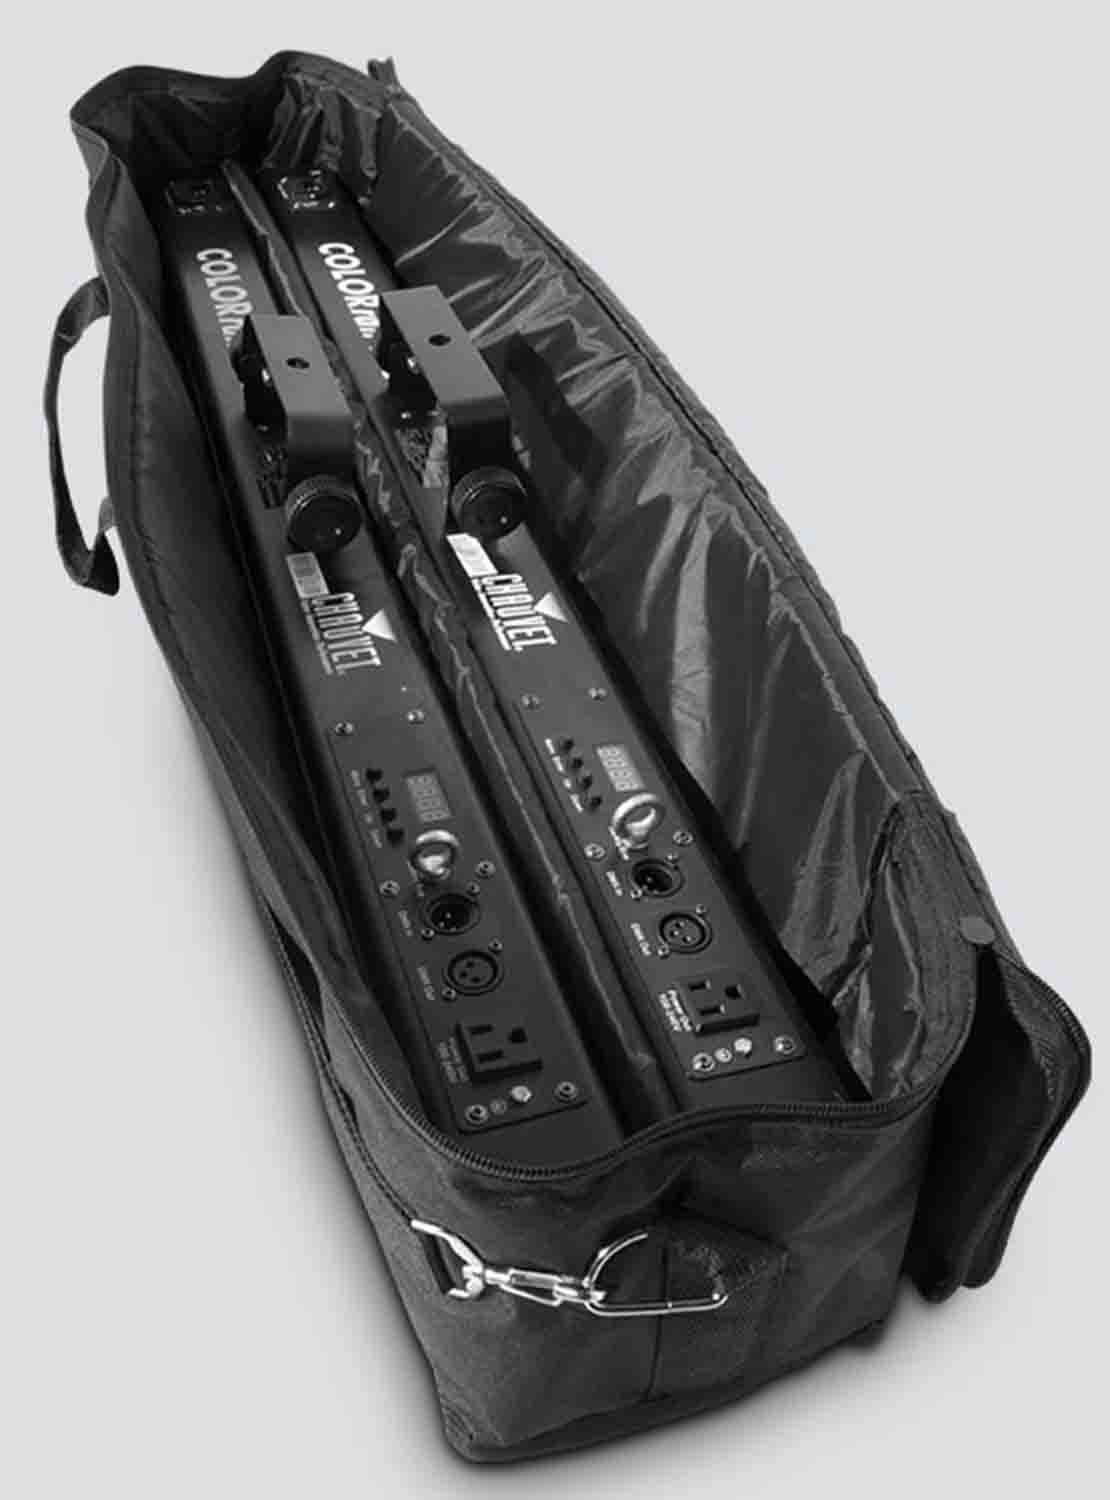 Chauvet DJ CHS60 LED Strip Light VIP Gear/Travel Bag | Lighting Accessories - Hollywood DJ